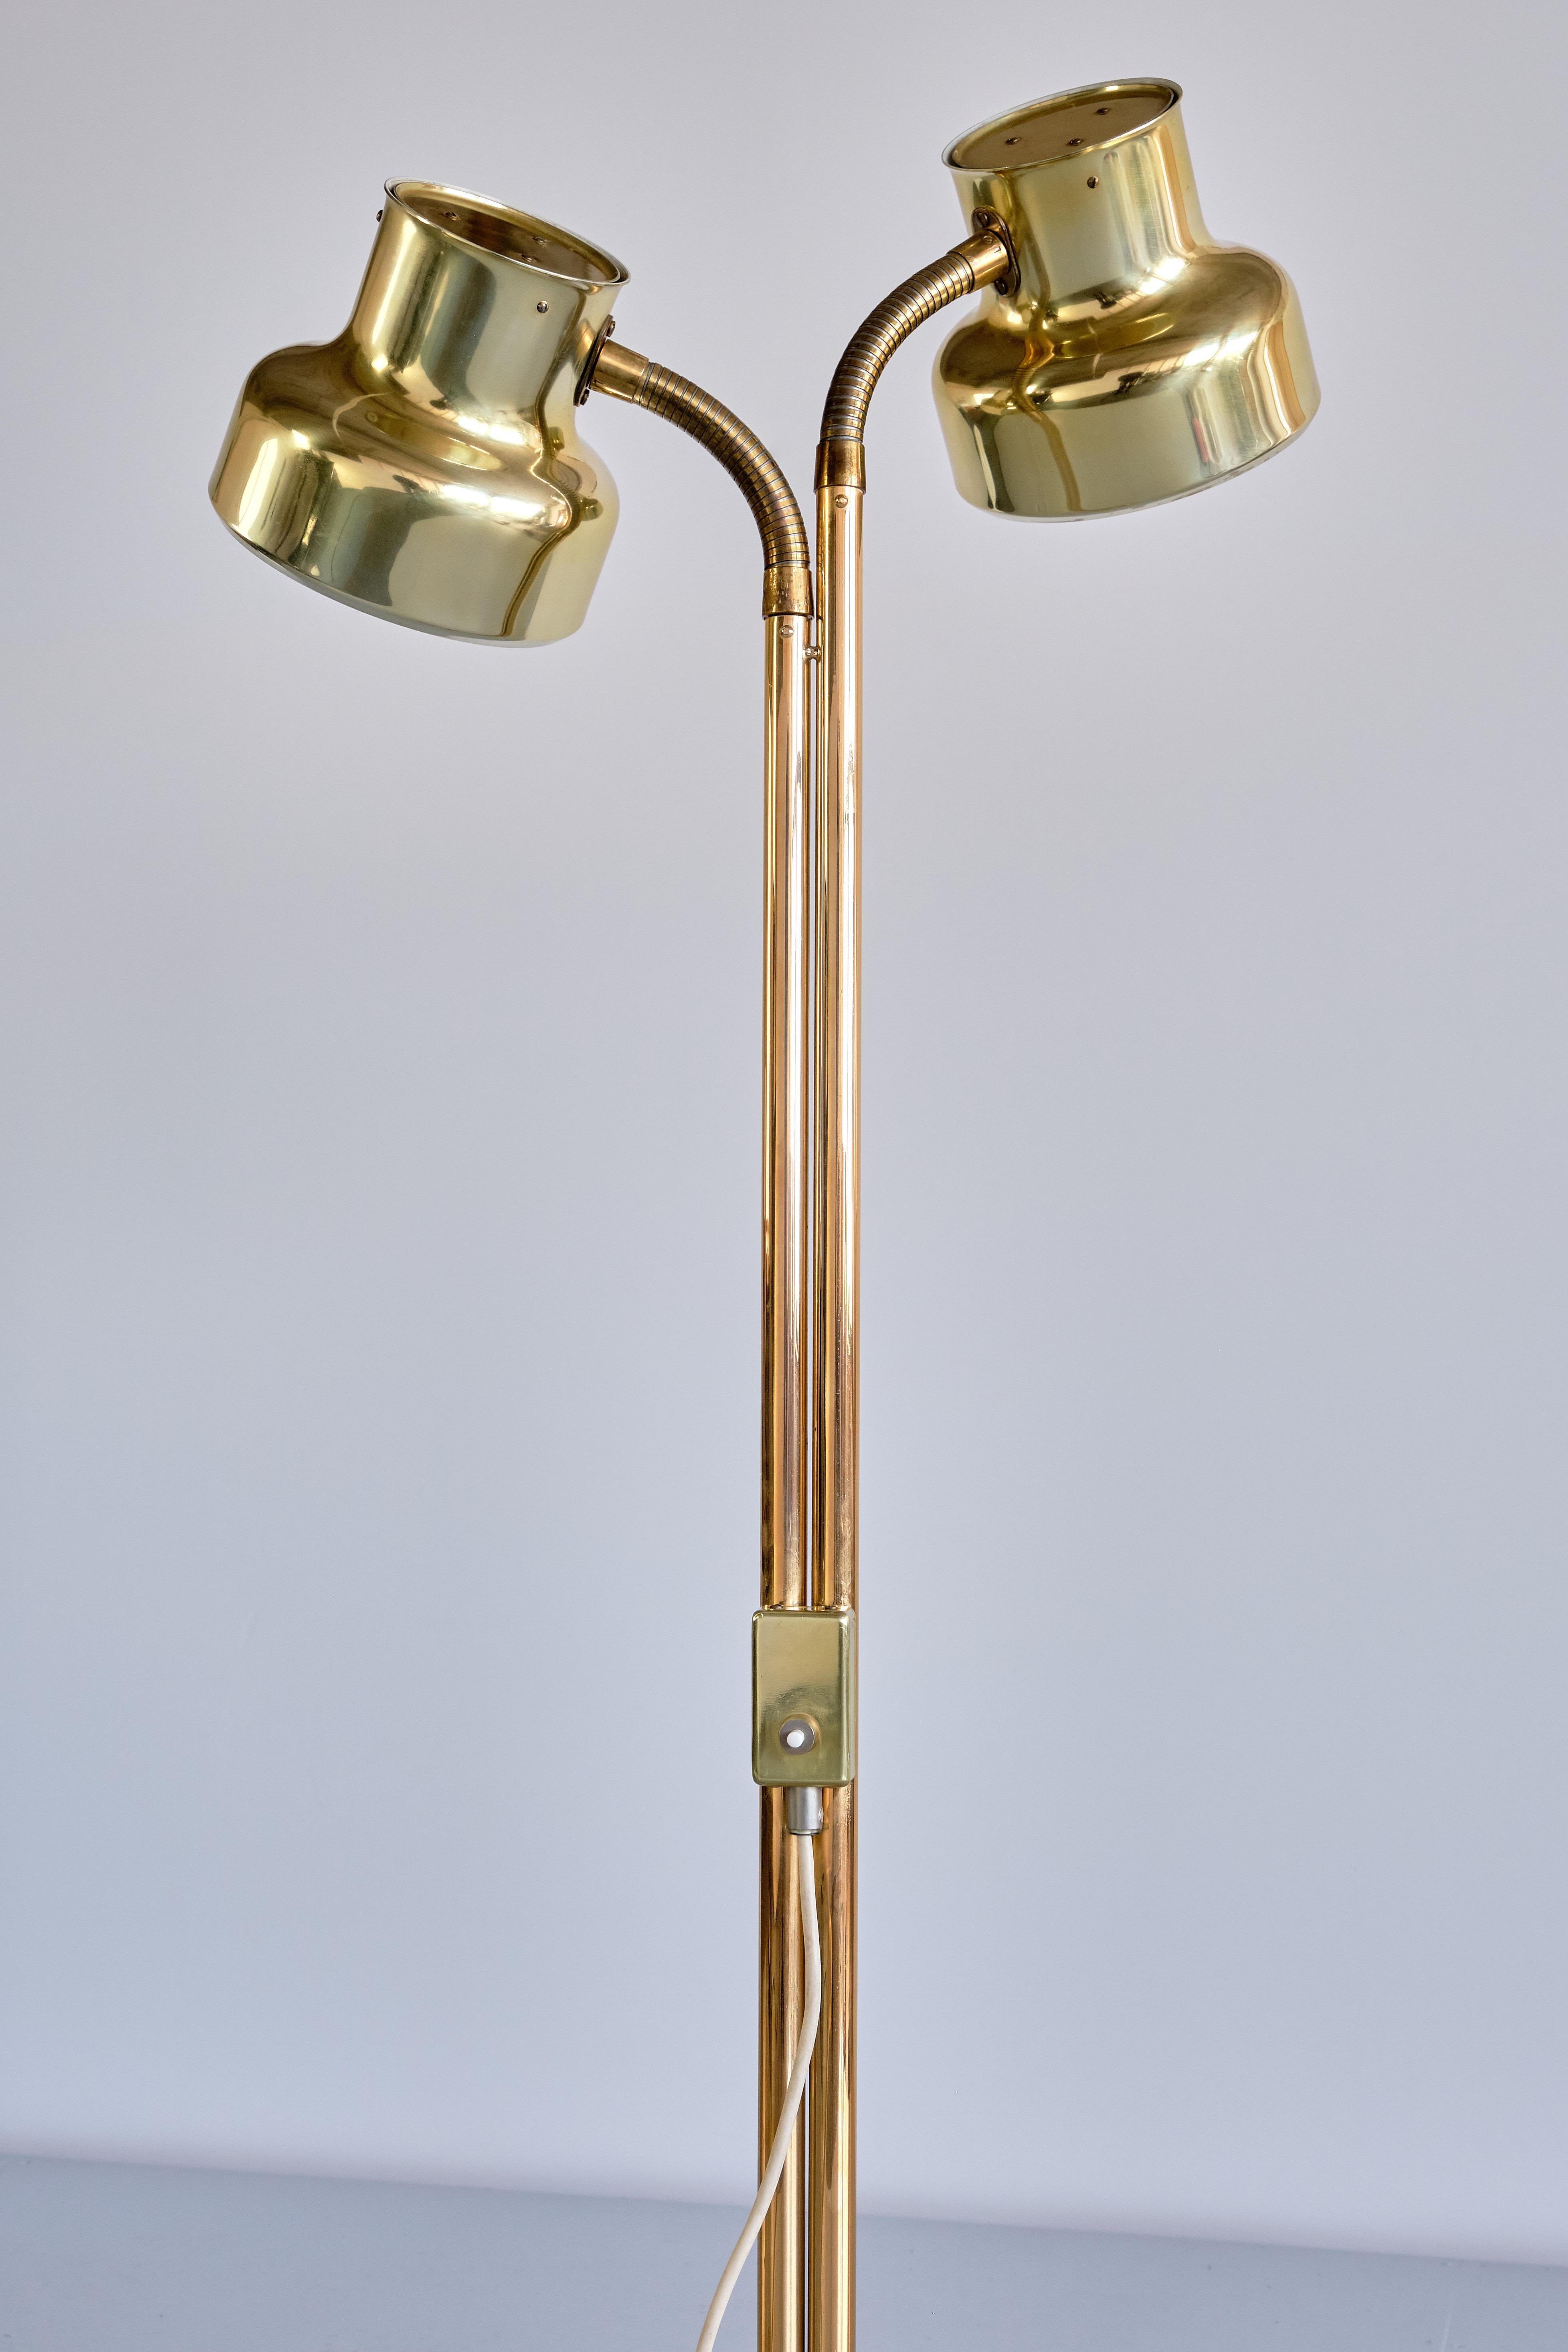 Anders Pehrson 'Bumling' Floor Lamp in Brass, Atelje Lyktan, Sweden, 1968 For Sale 5